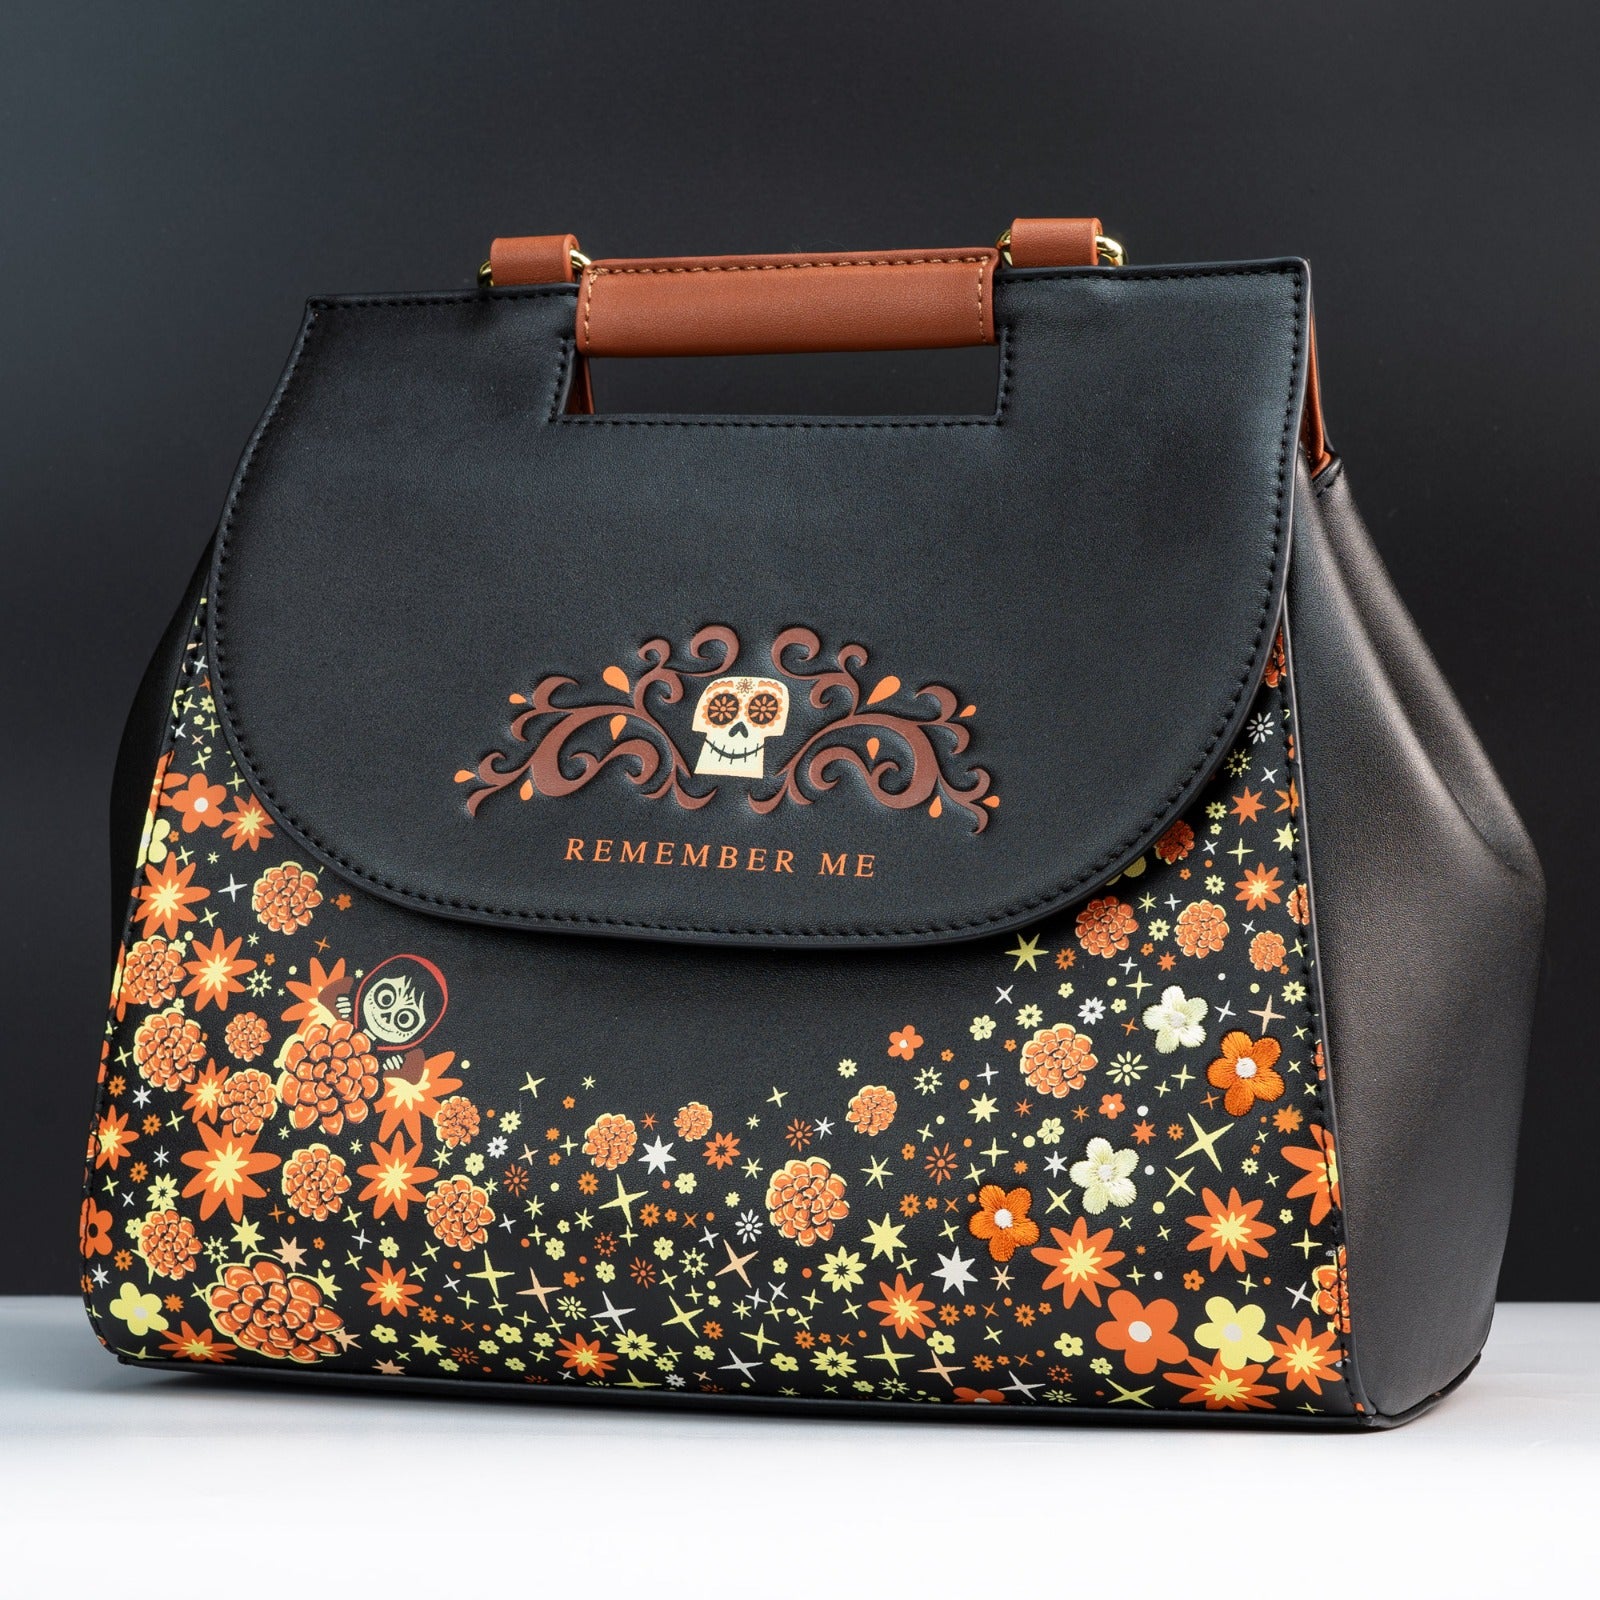 Loungefly x Disney Pixar Coco Remember Me Floral Handbag